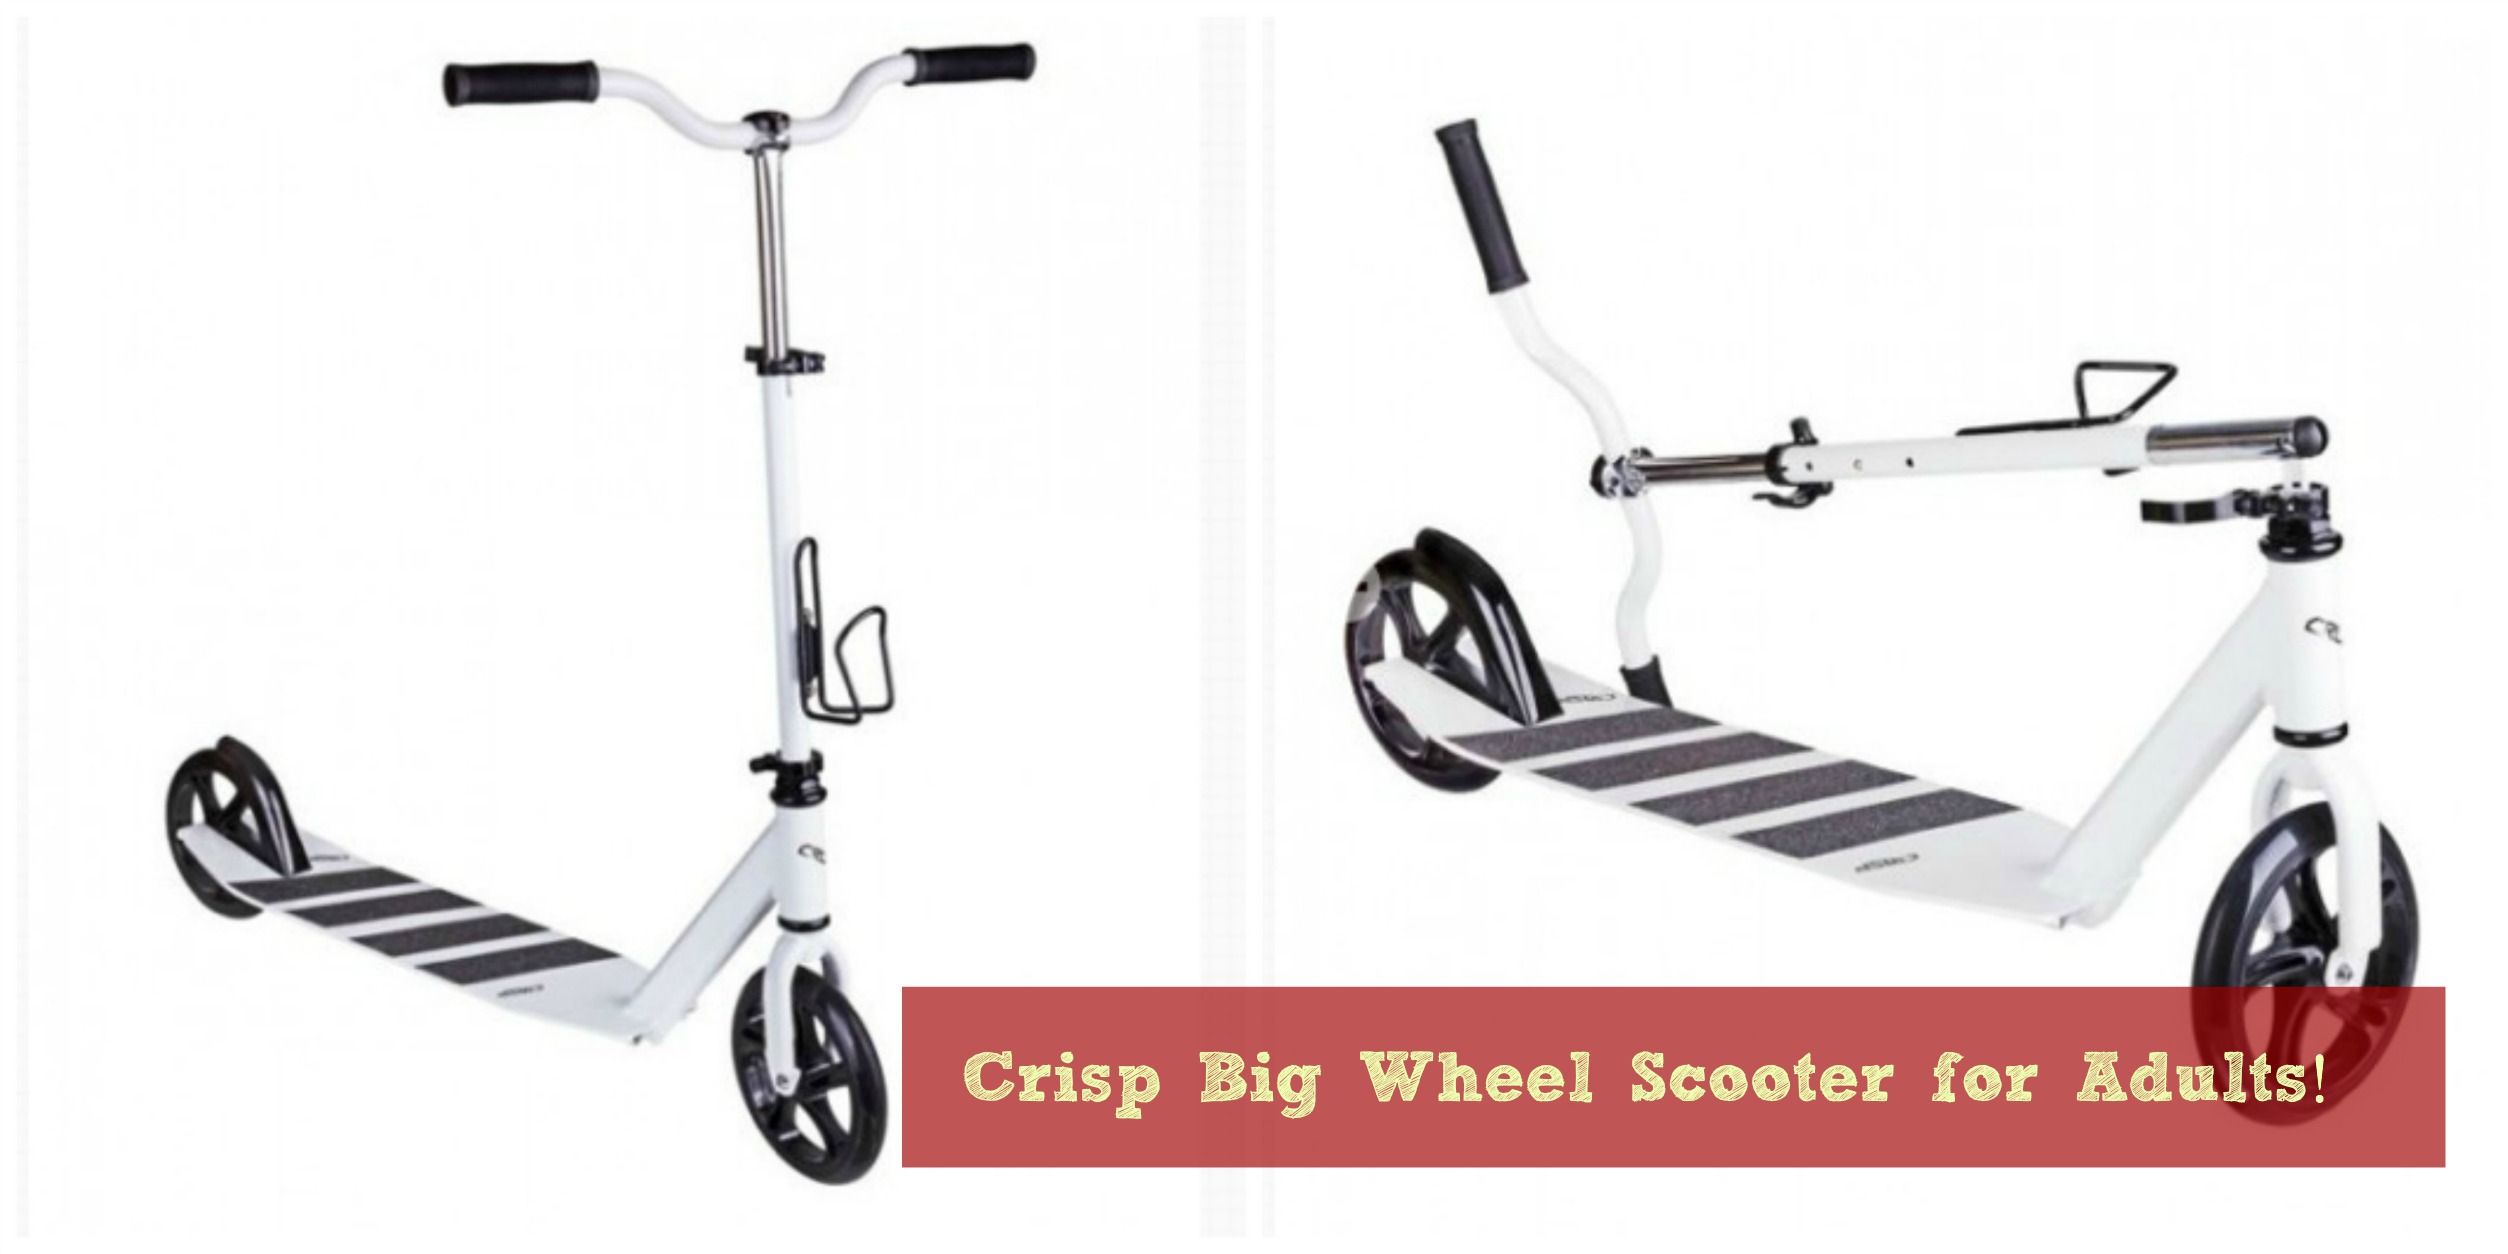 crisp big wheels adult scooter review text